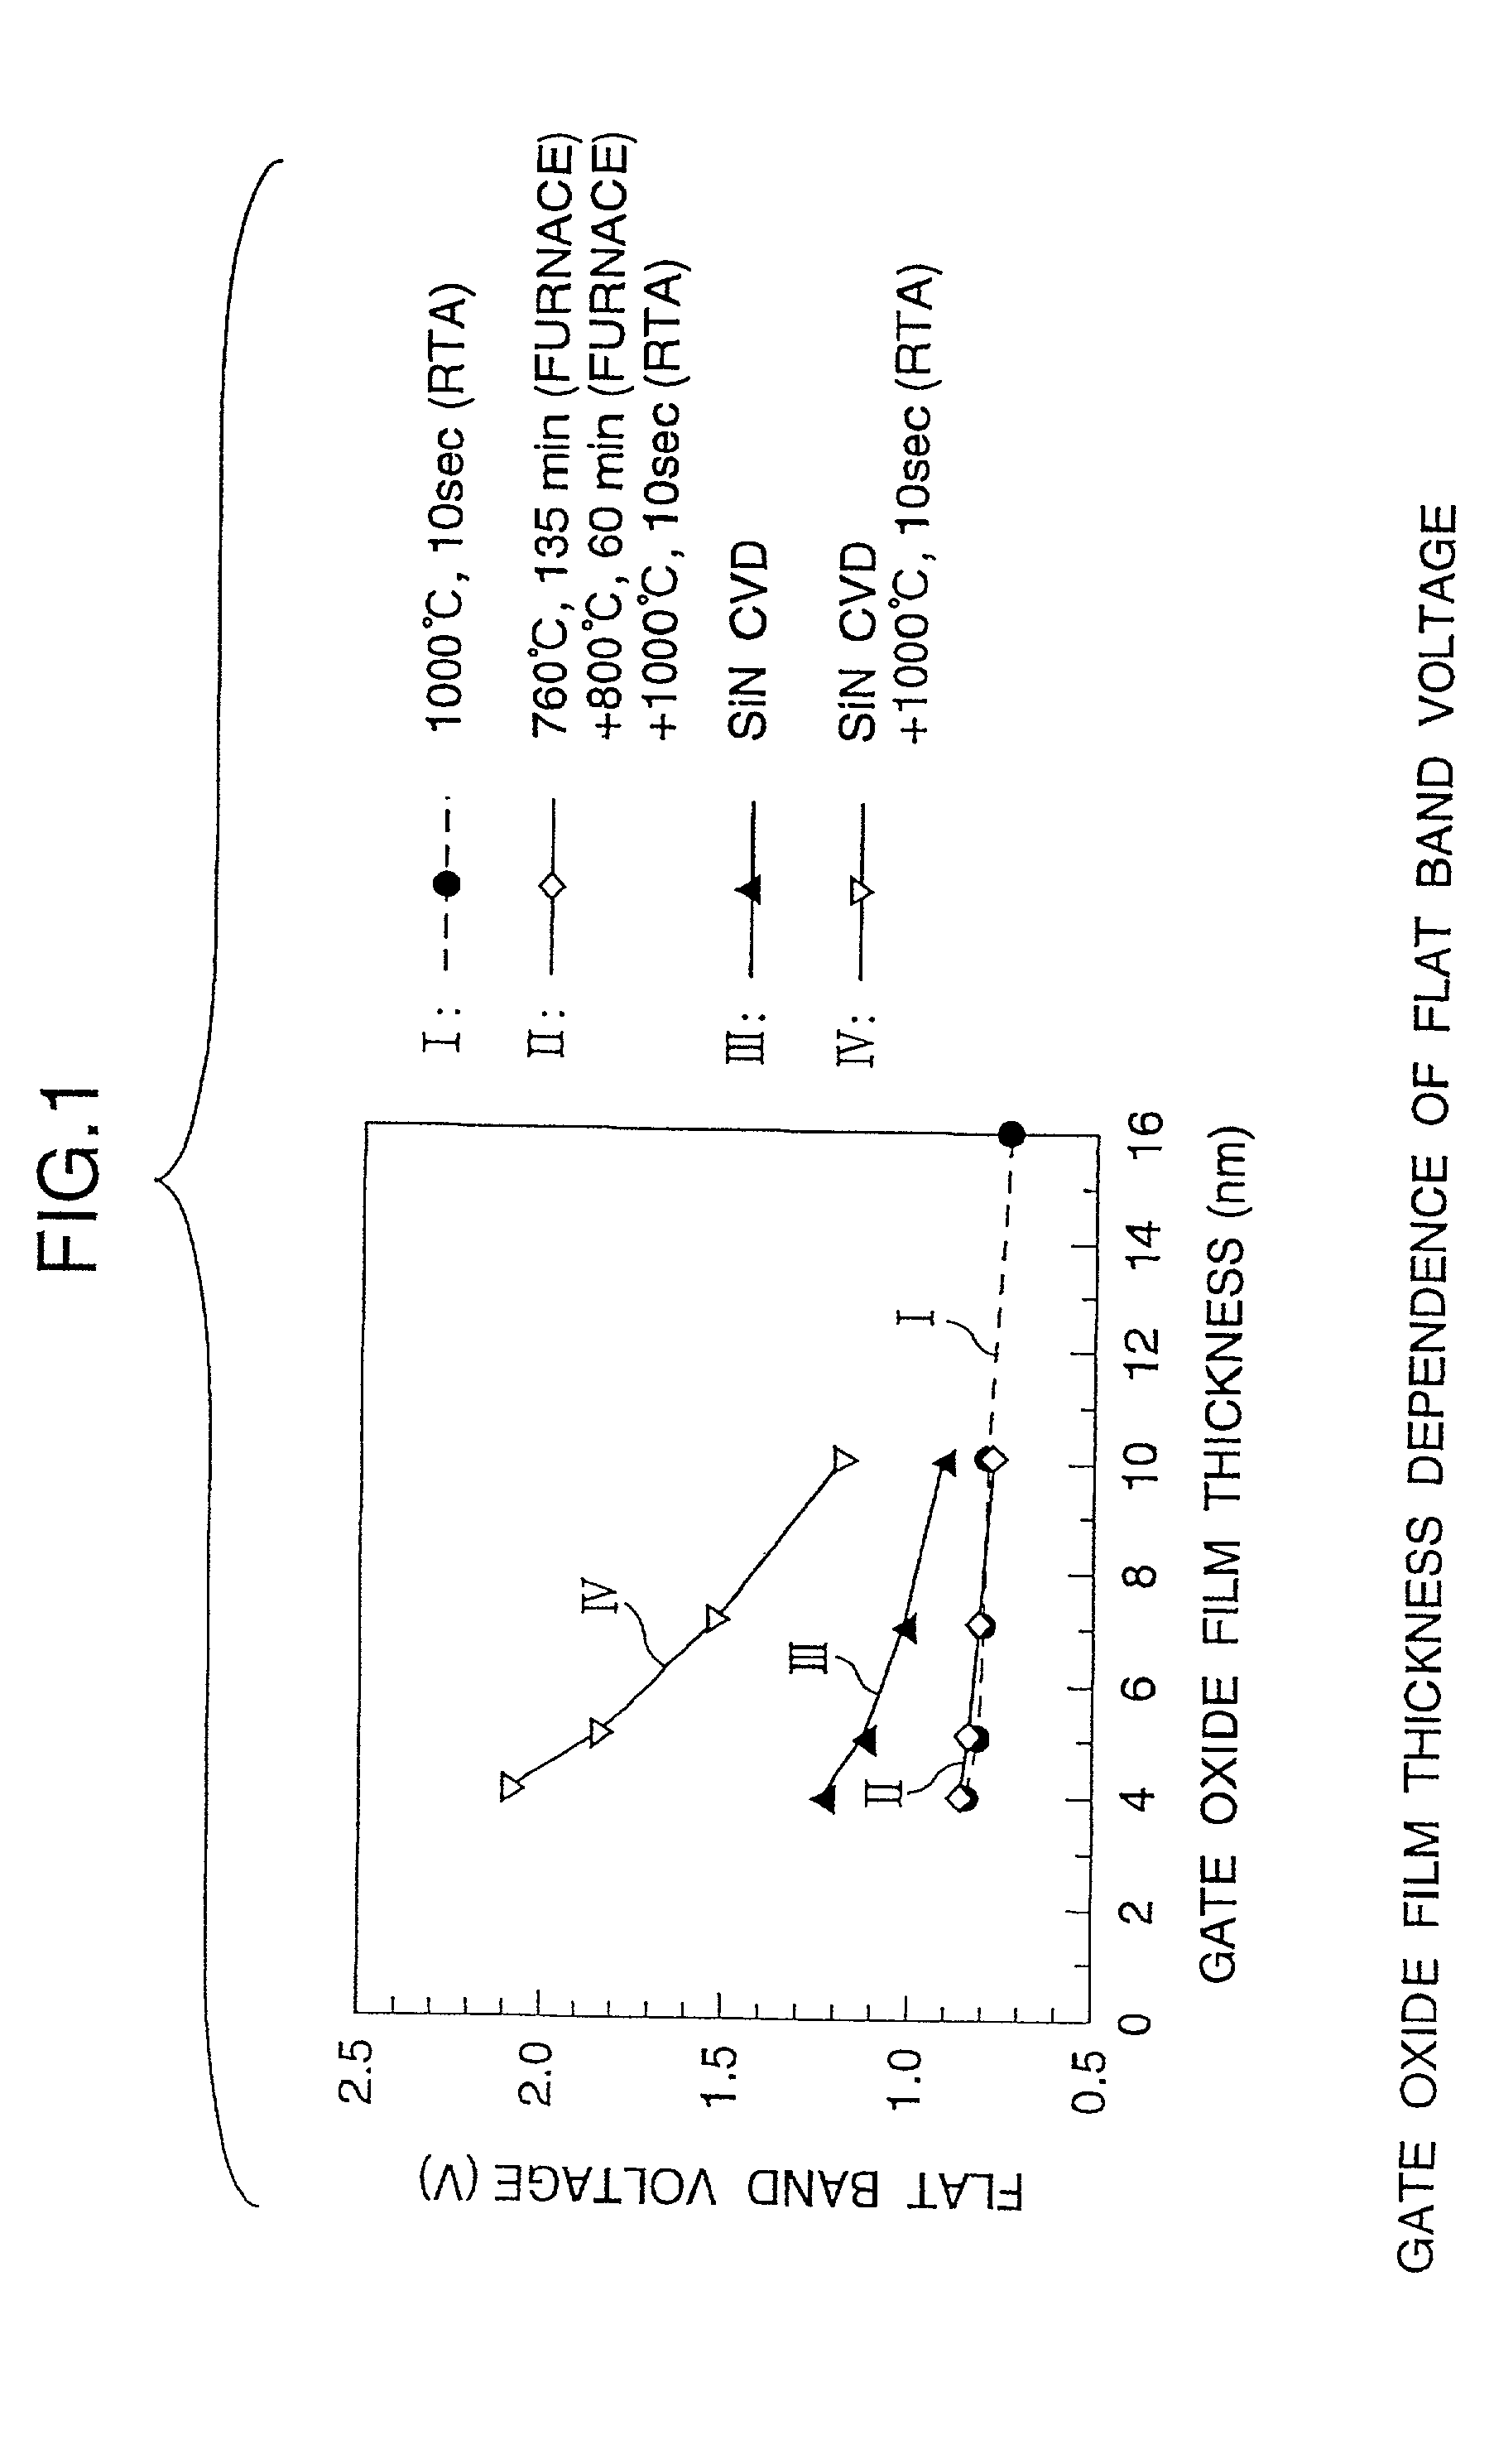 Method for fabricating mos transistors